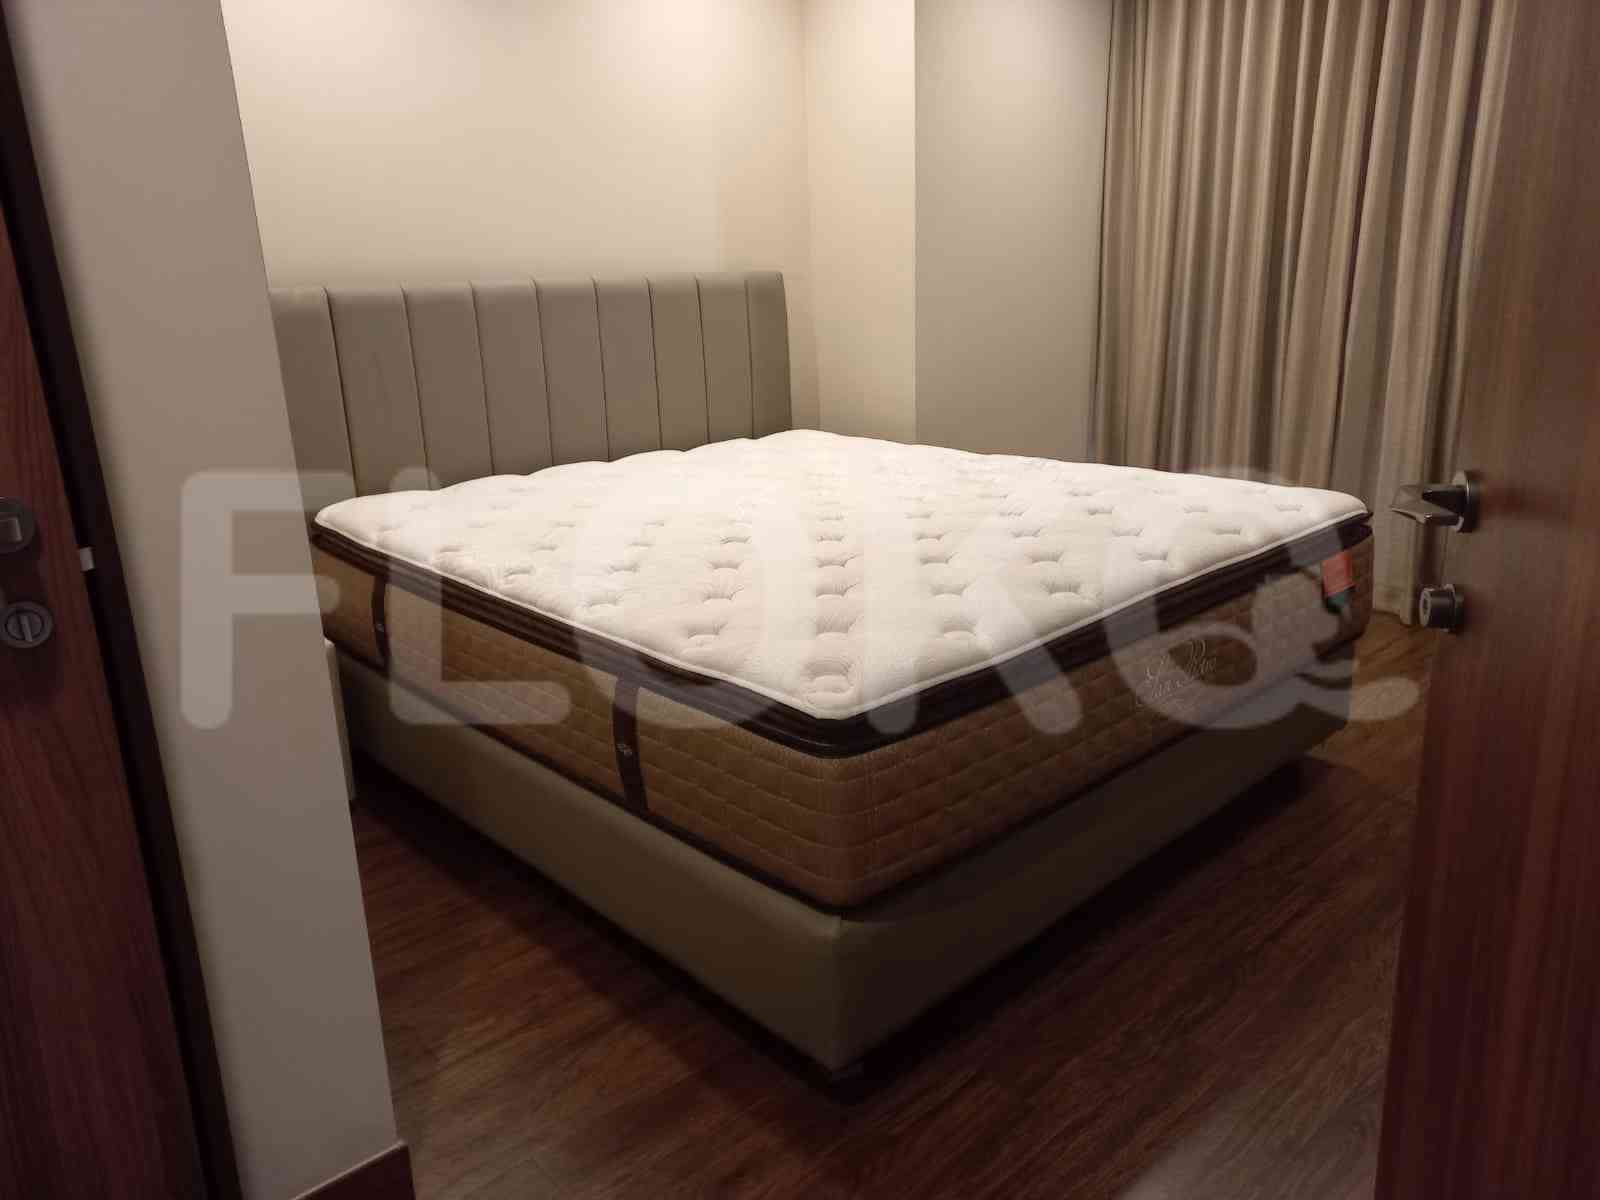 2 Bedroom on 5th Floor for Rent in Apartemen Branz Simatupang - ftb525 2